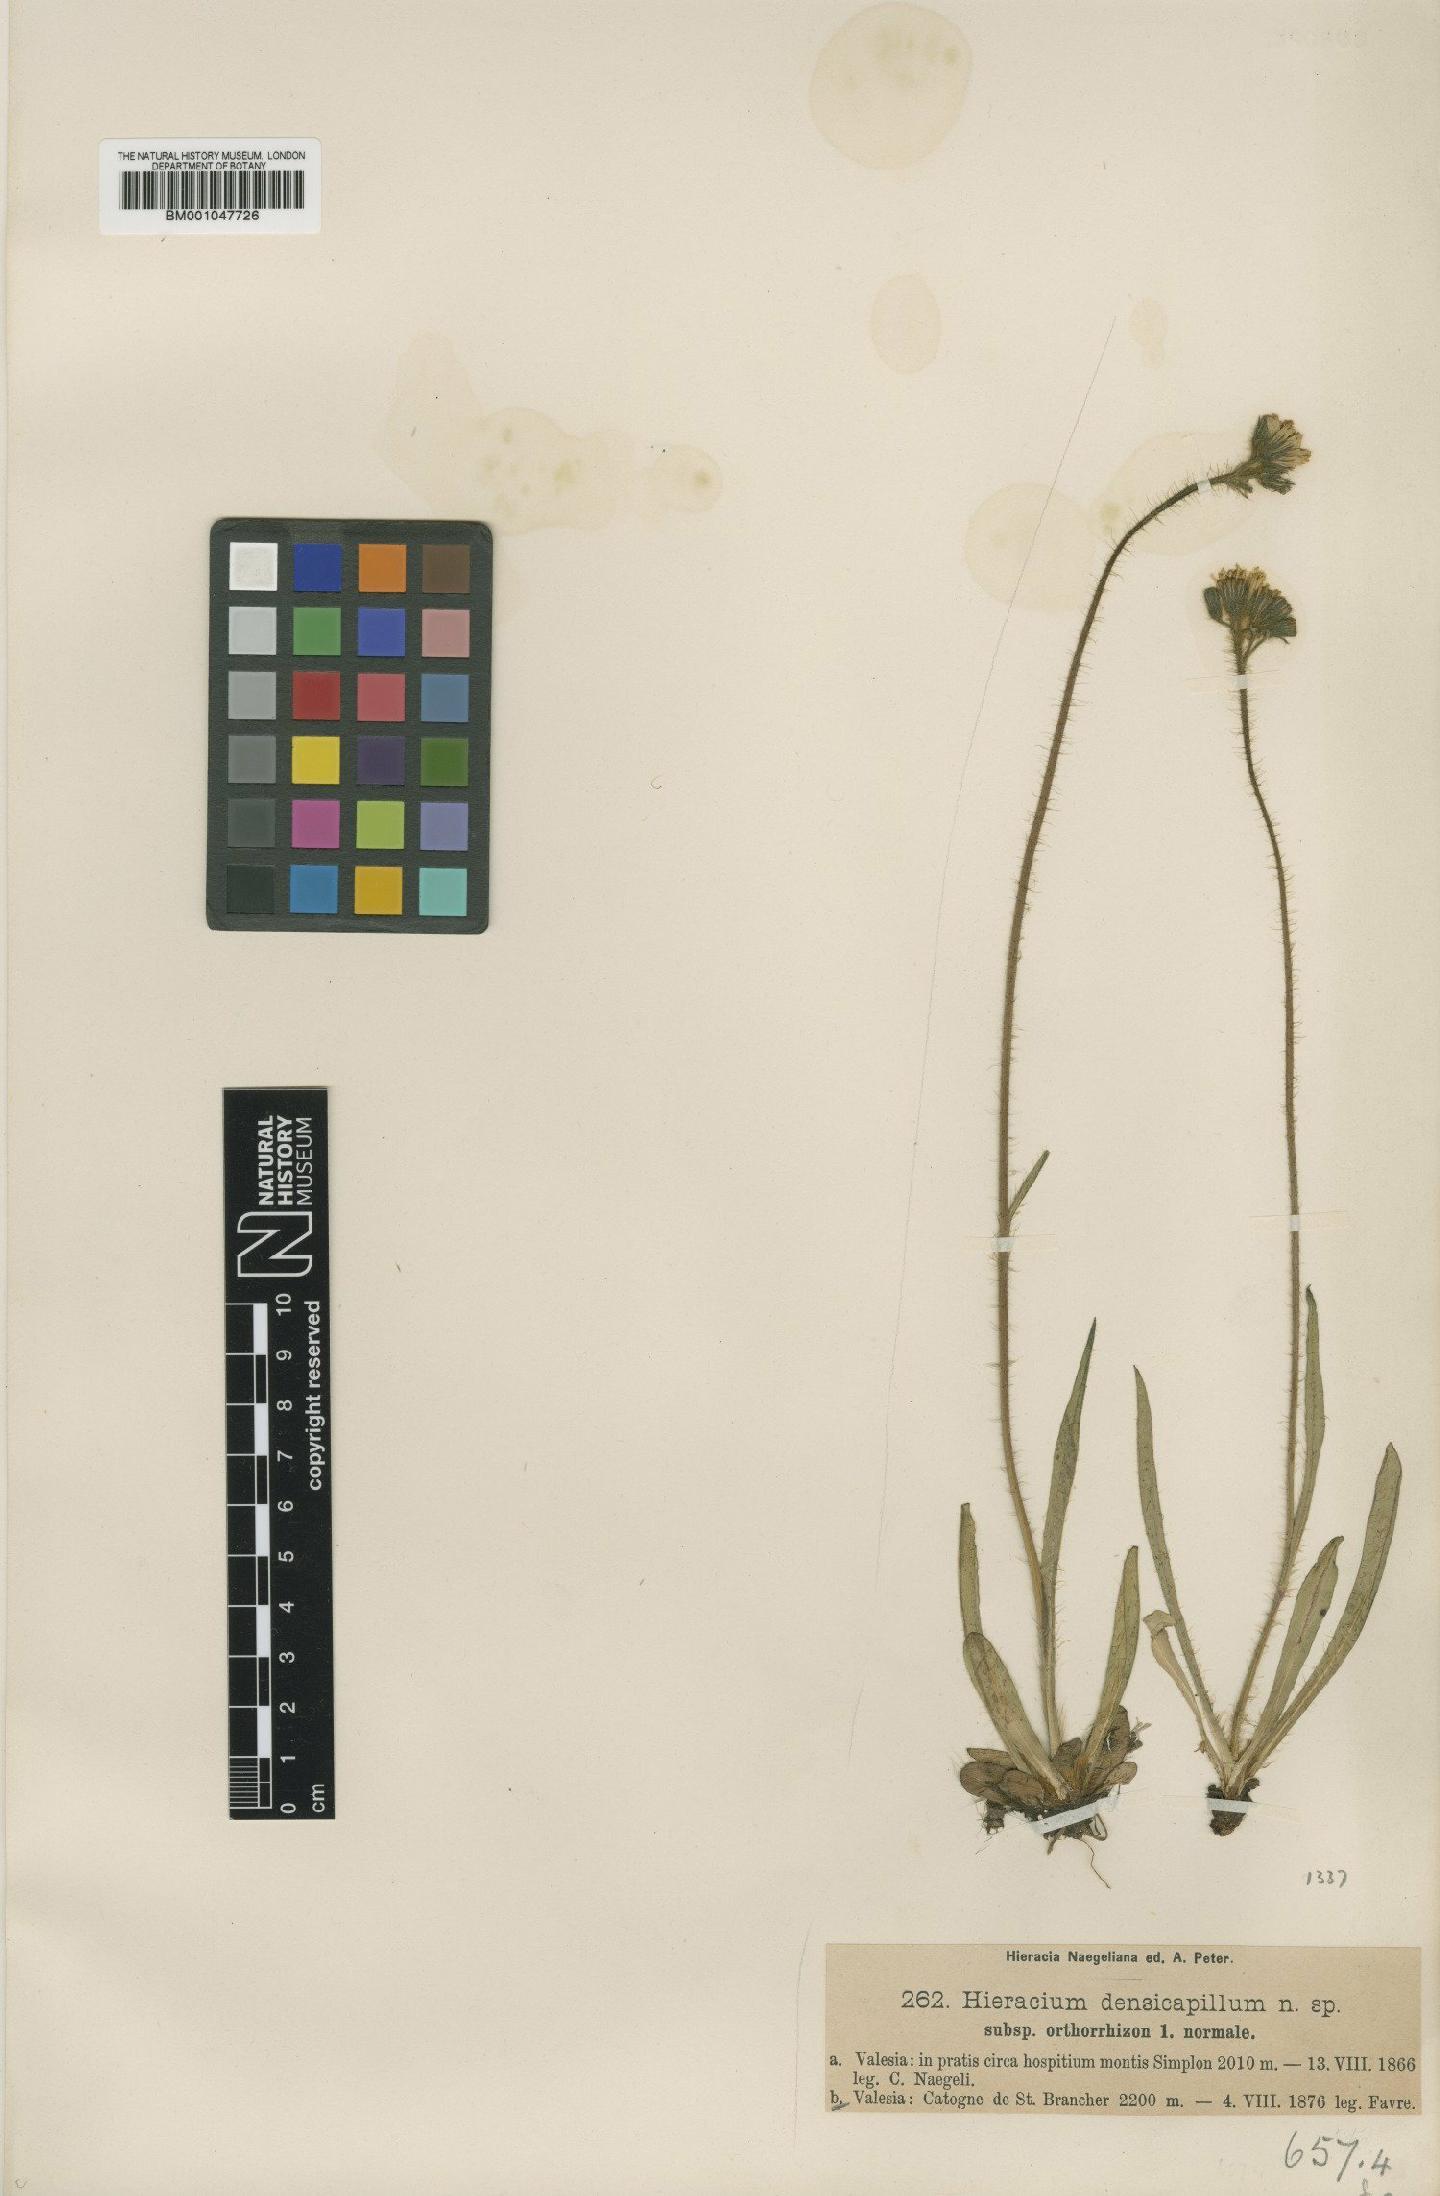 To NHMUK collection (Hieracium laggeri subsp. orthorrhizon Nägeli & Peter; NHMUK:ecatalogue:2813181)